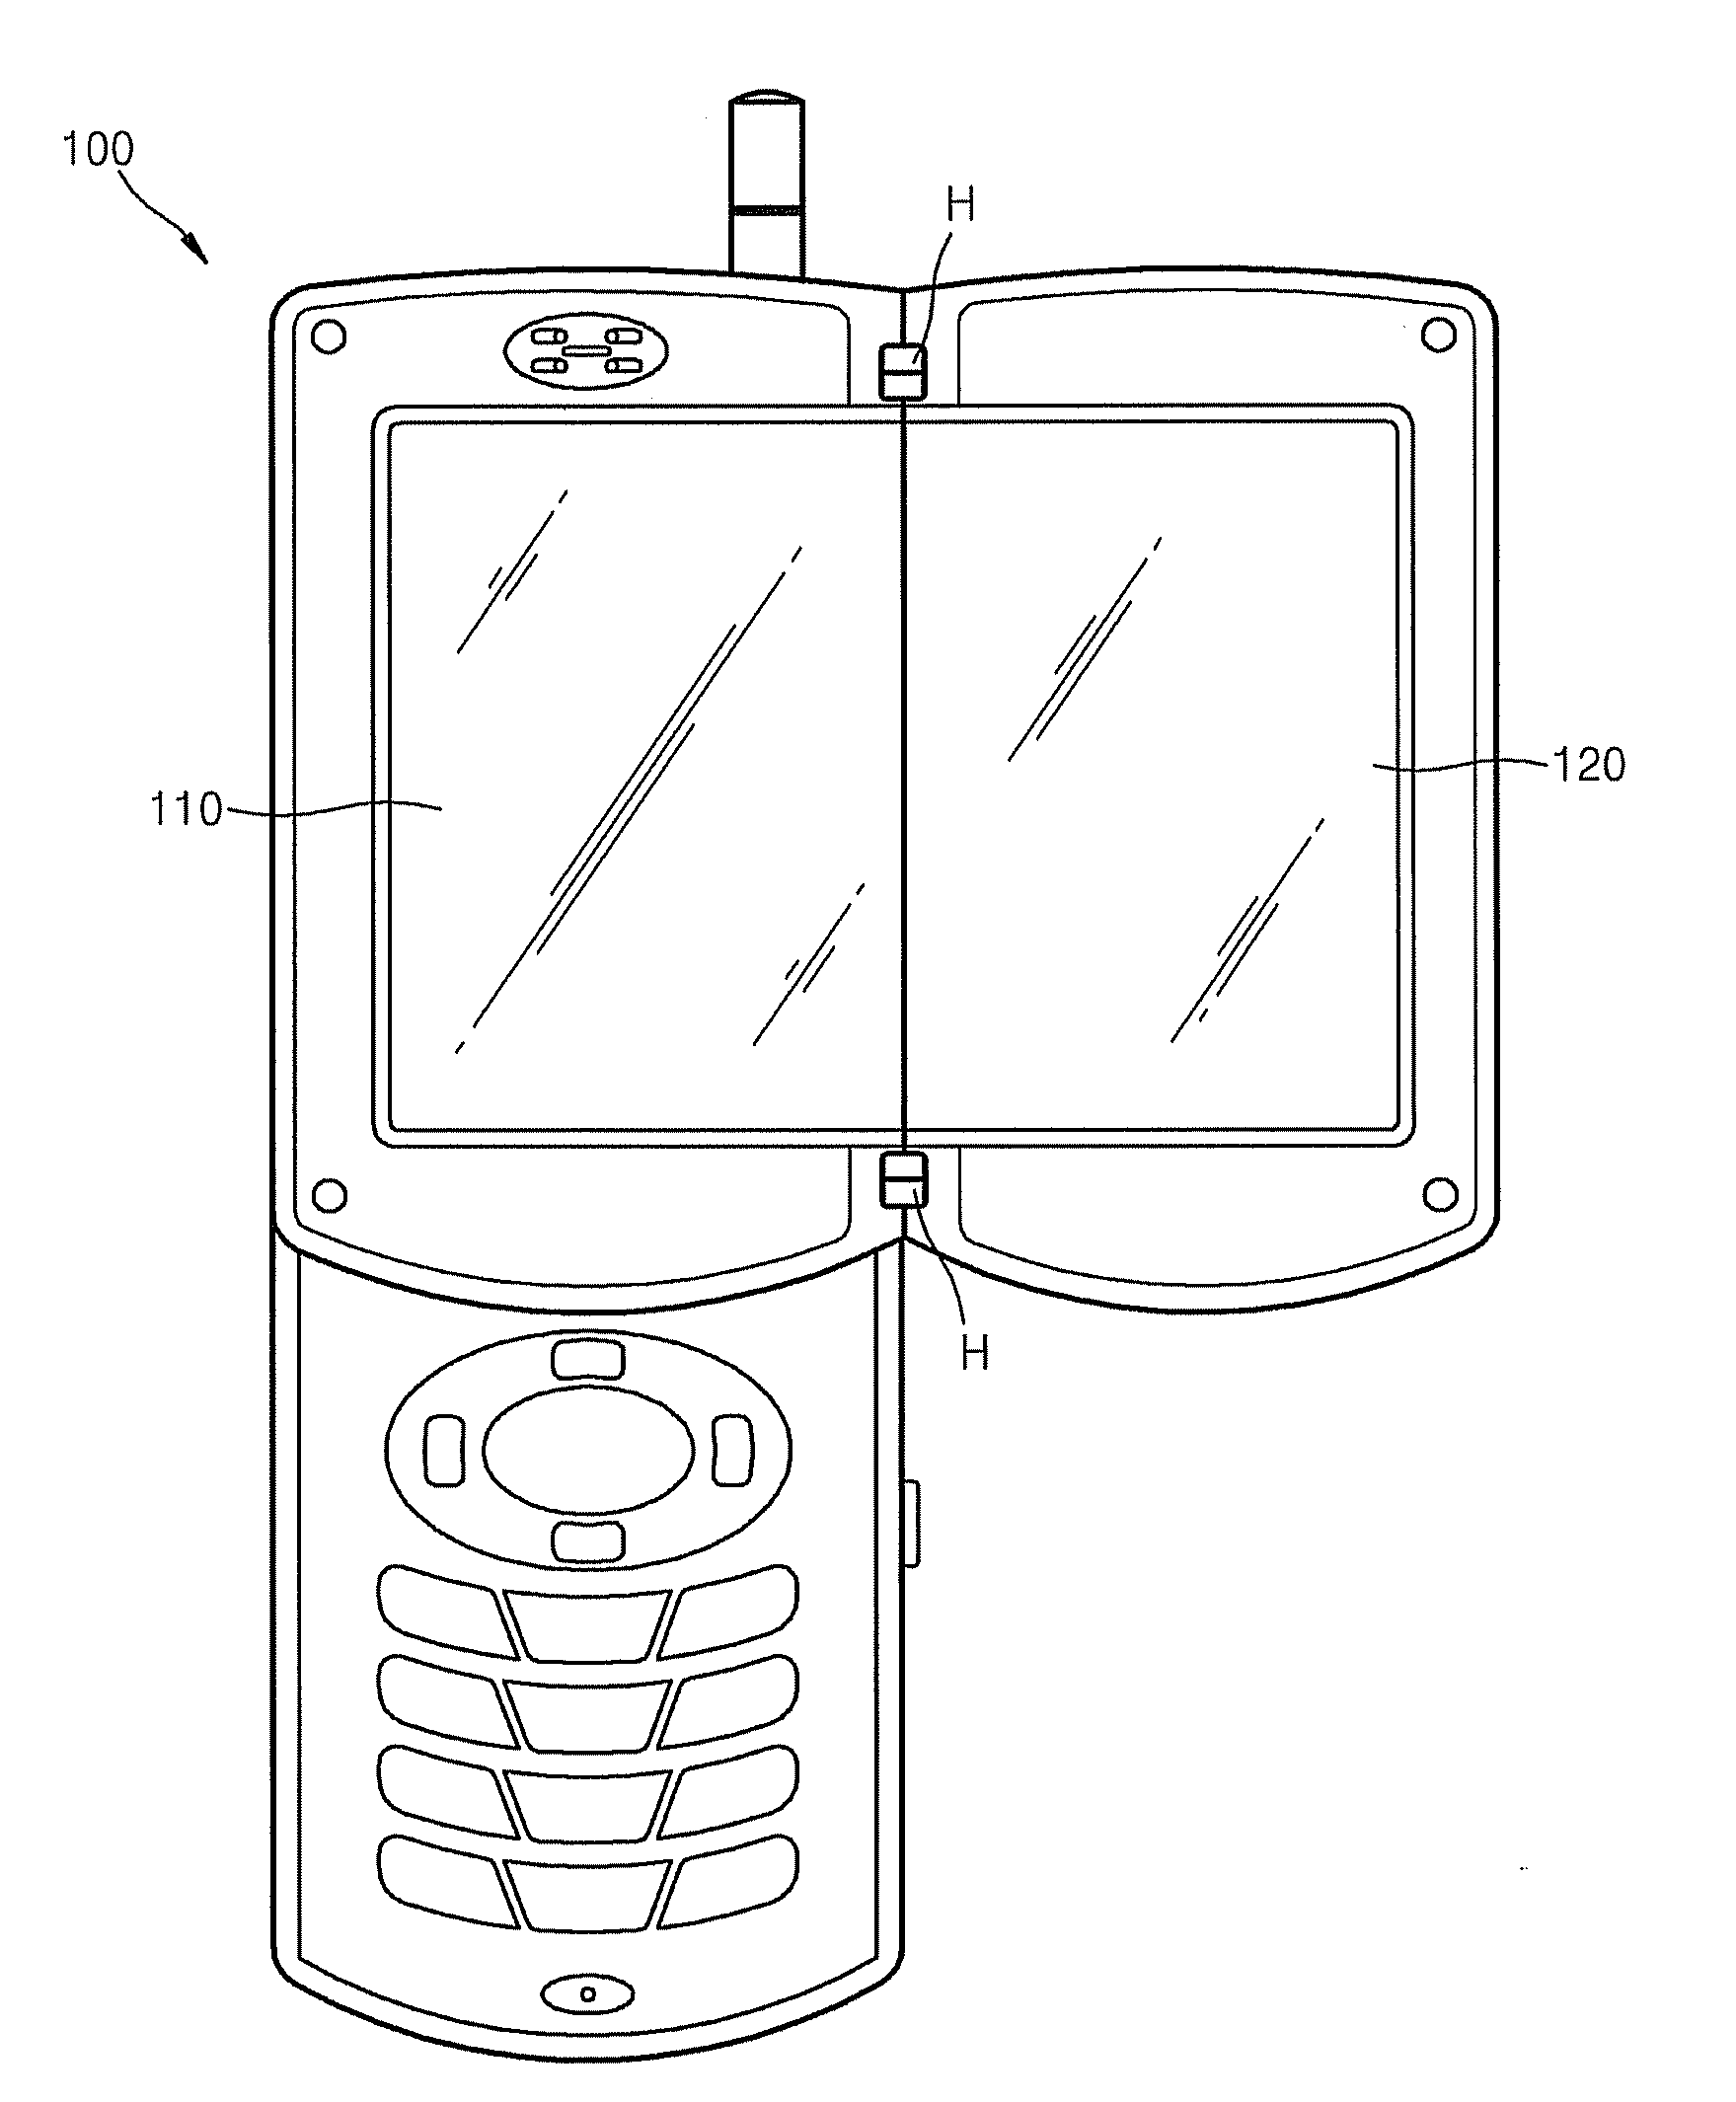 Multi-display apparatus and method thereof